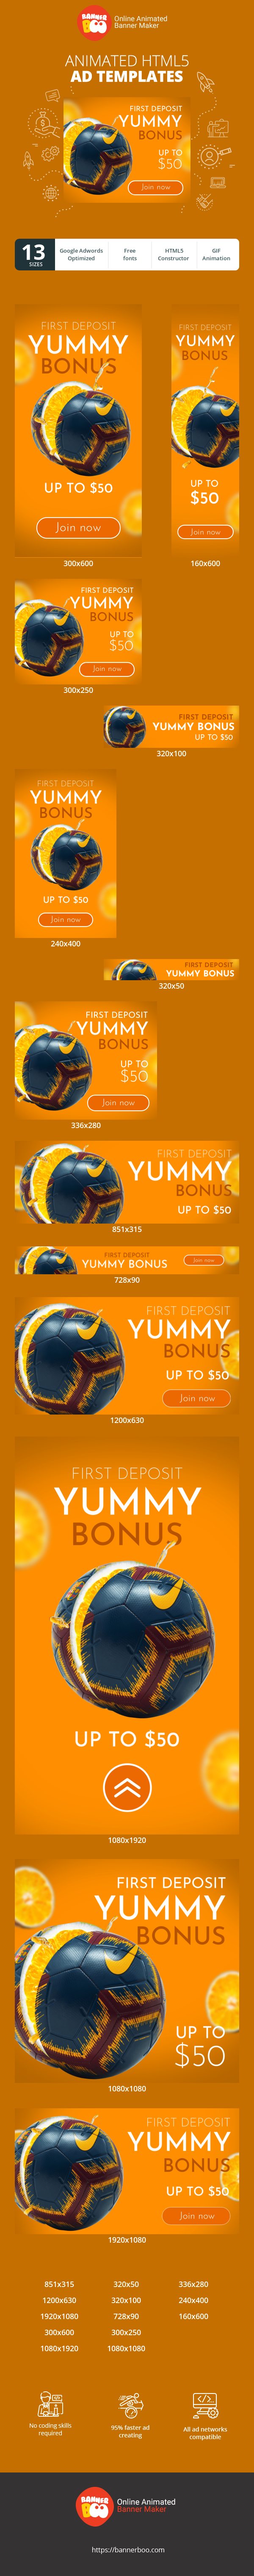 First Deposit Yummy Bonus — Up To $50